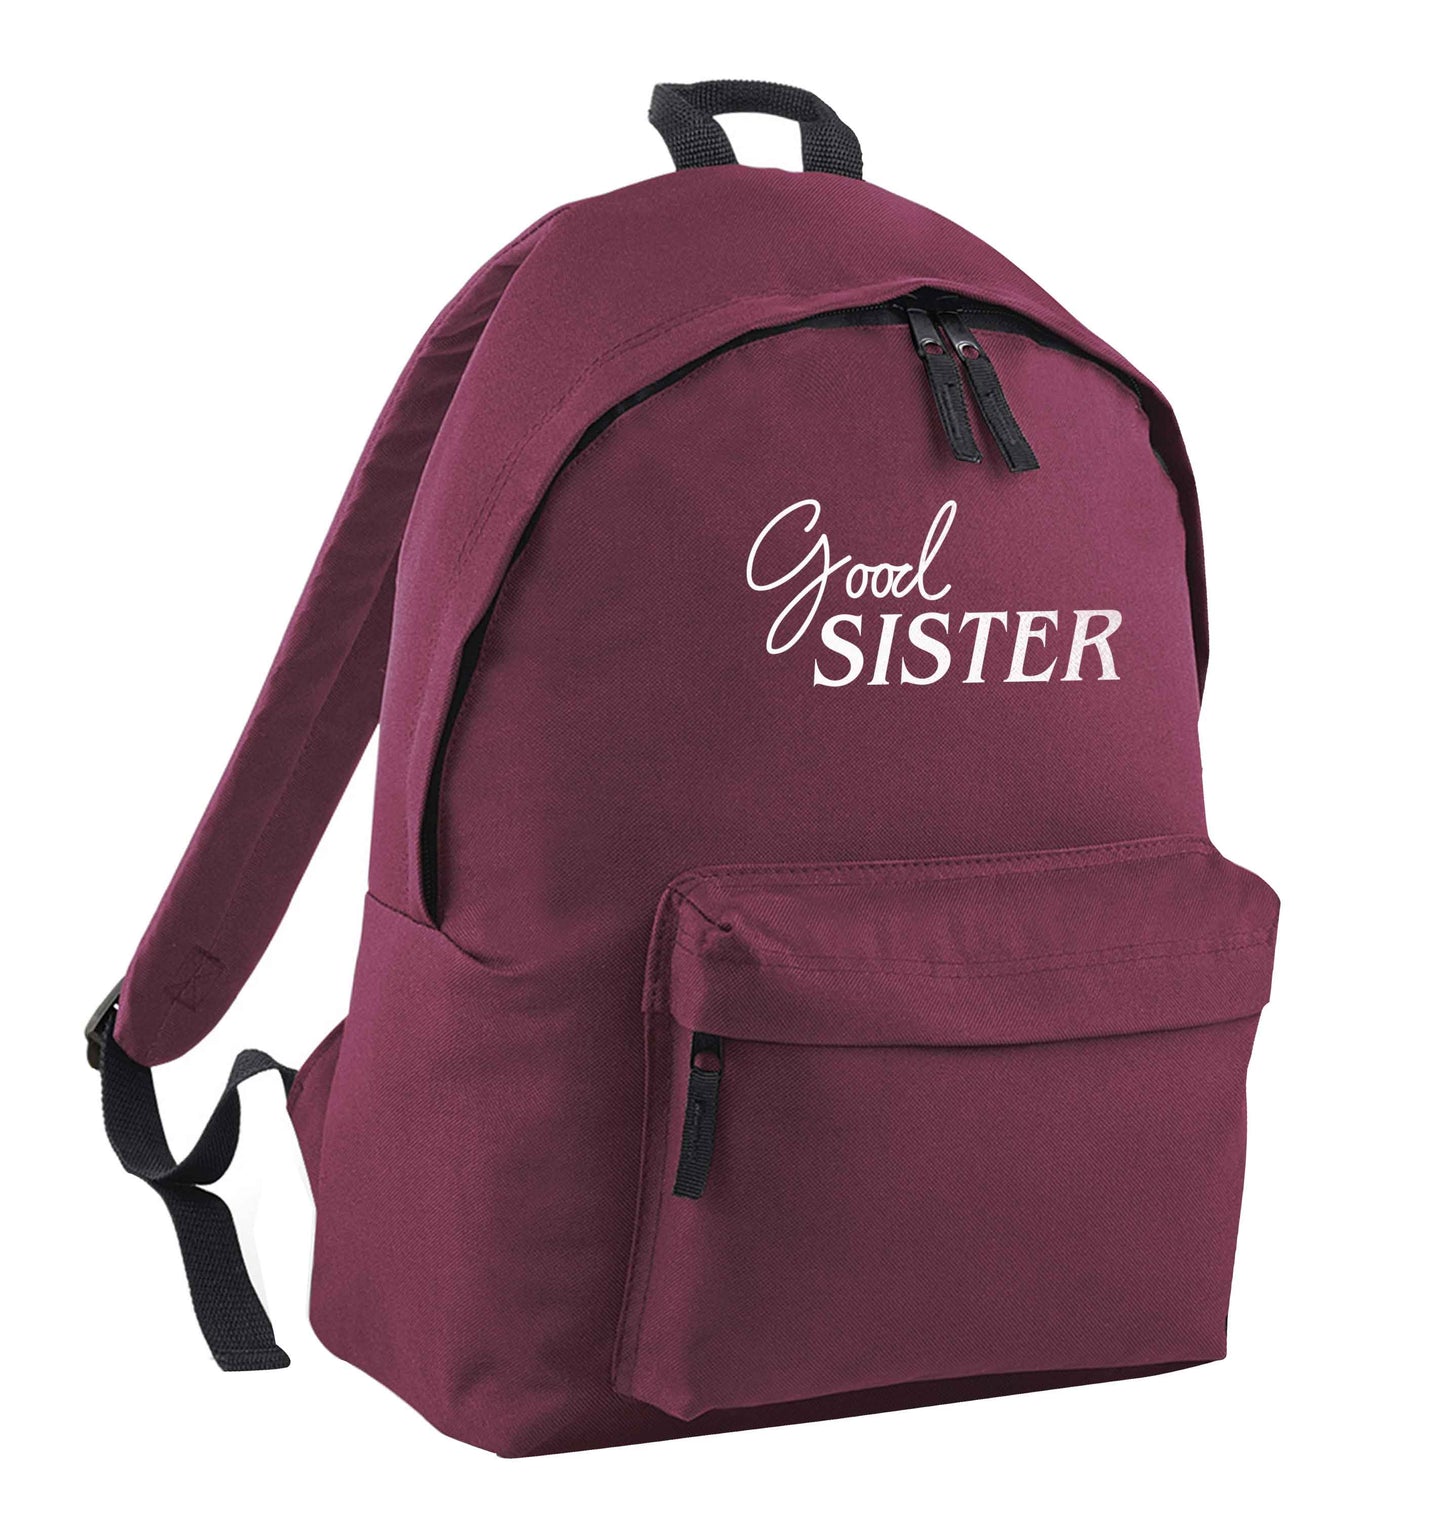 Good sister maroon adults backpack